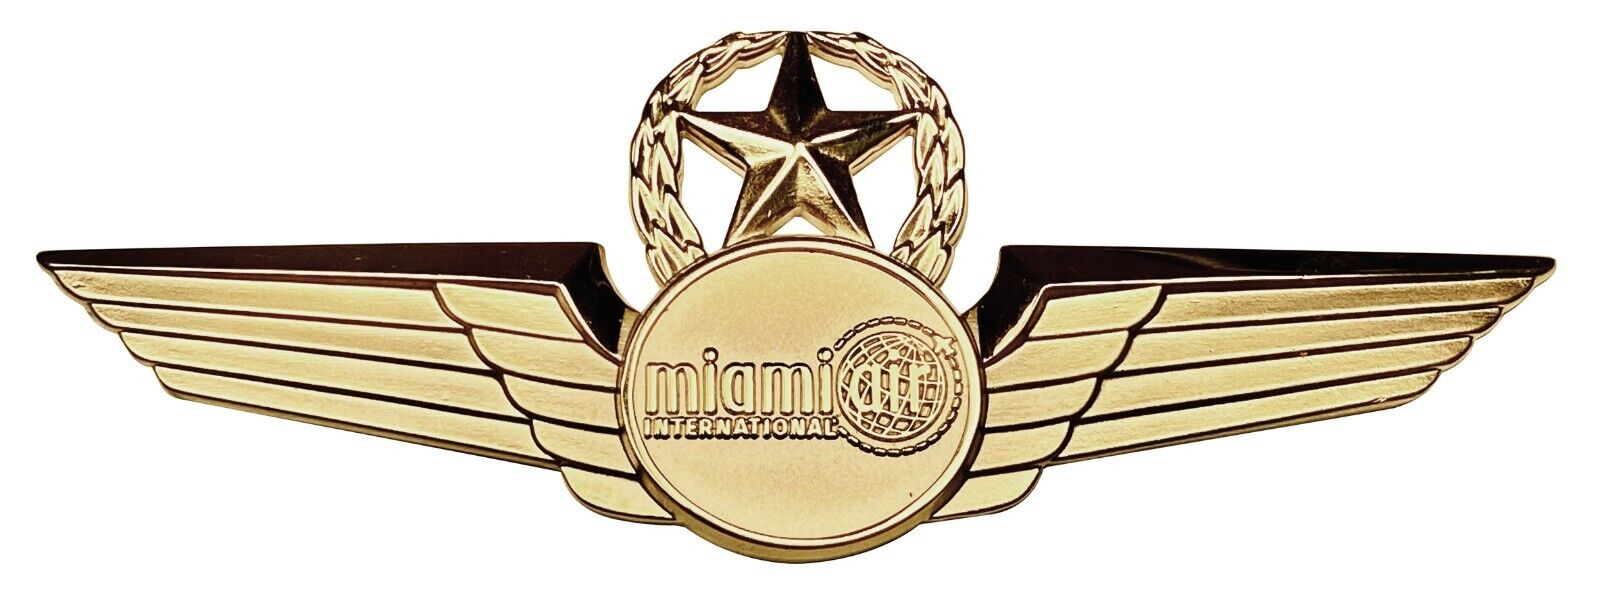 Miami Air International- Captain Wing